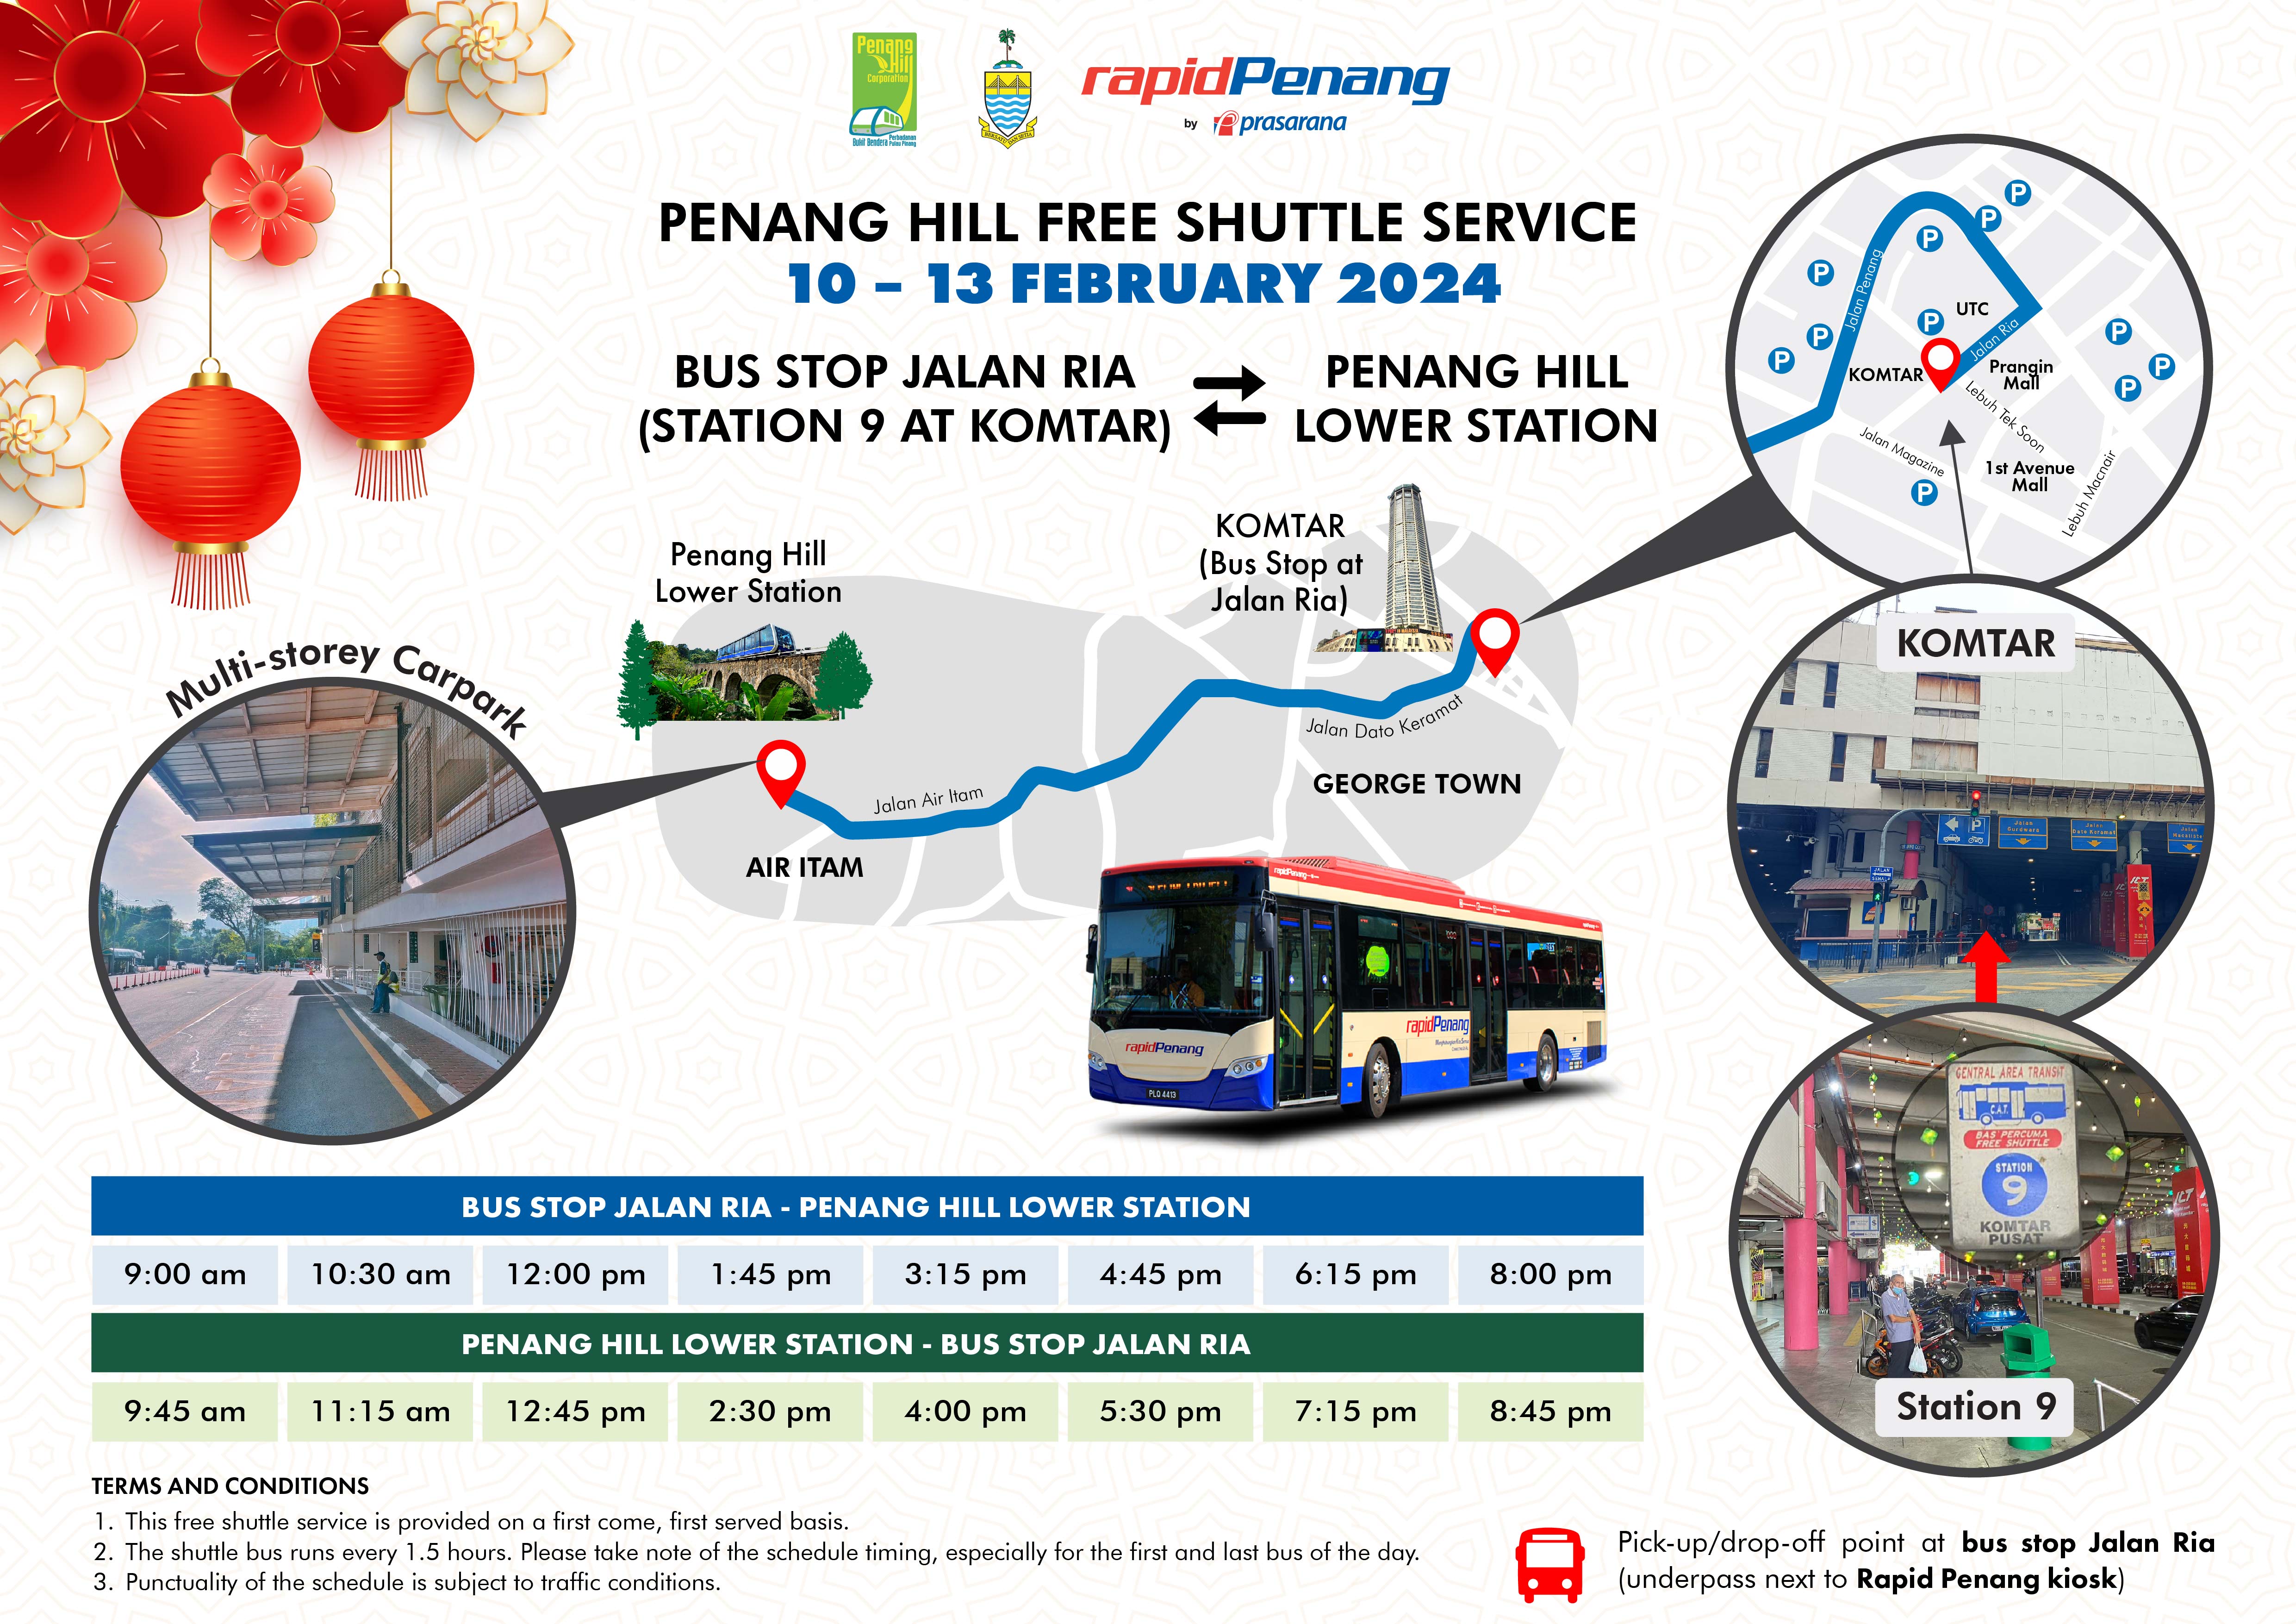 Penang Hill Free Shuttle Service (10 - 13 February 2024)